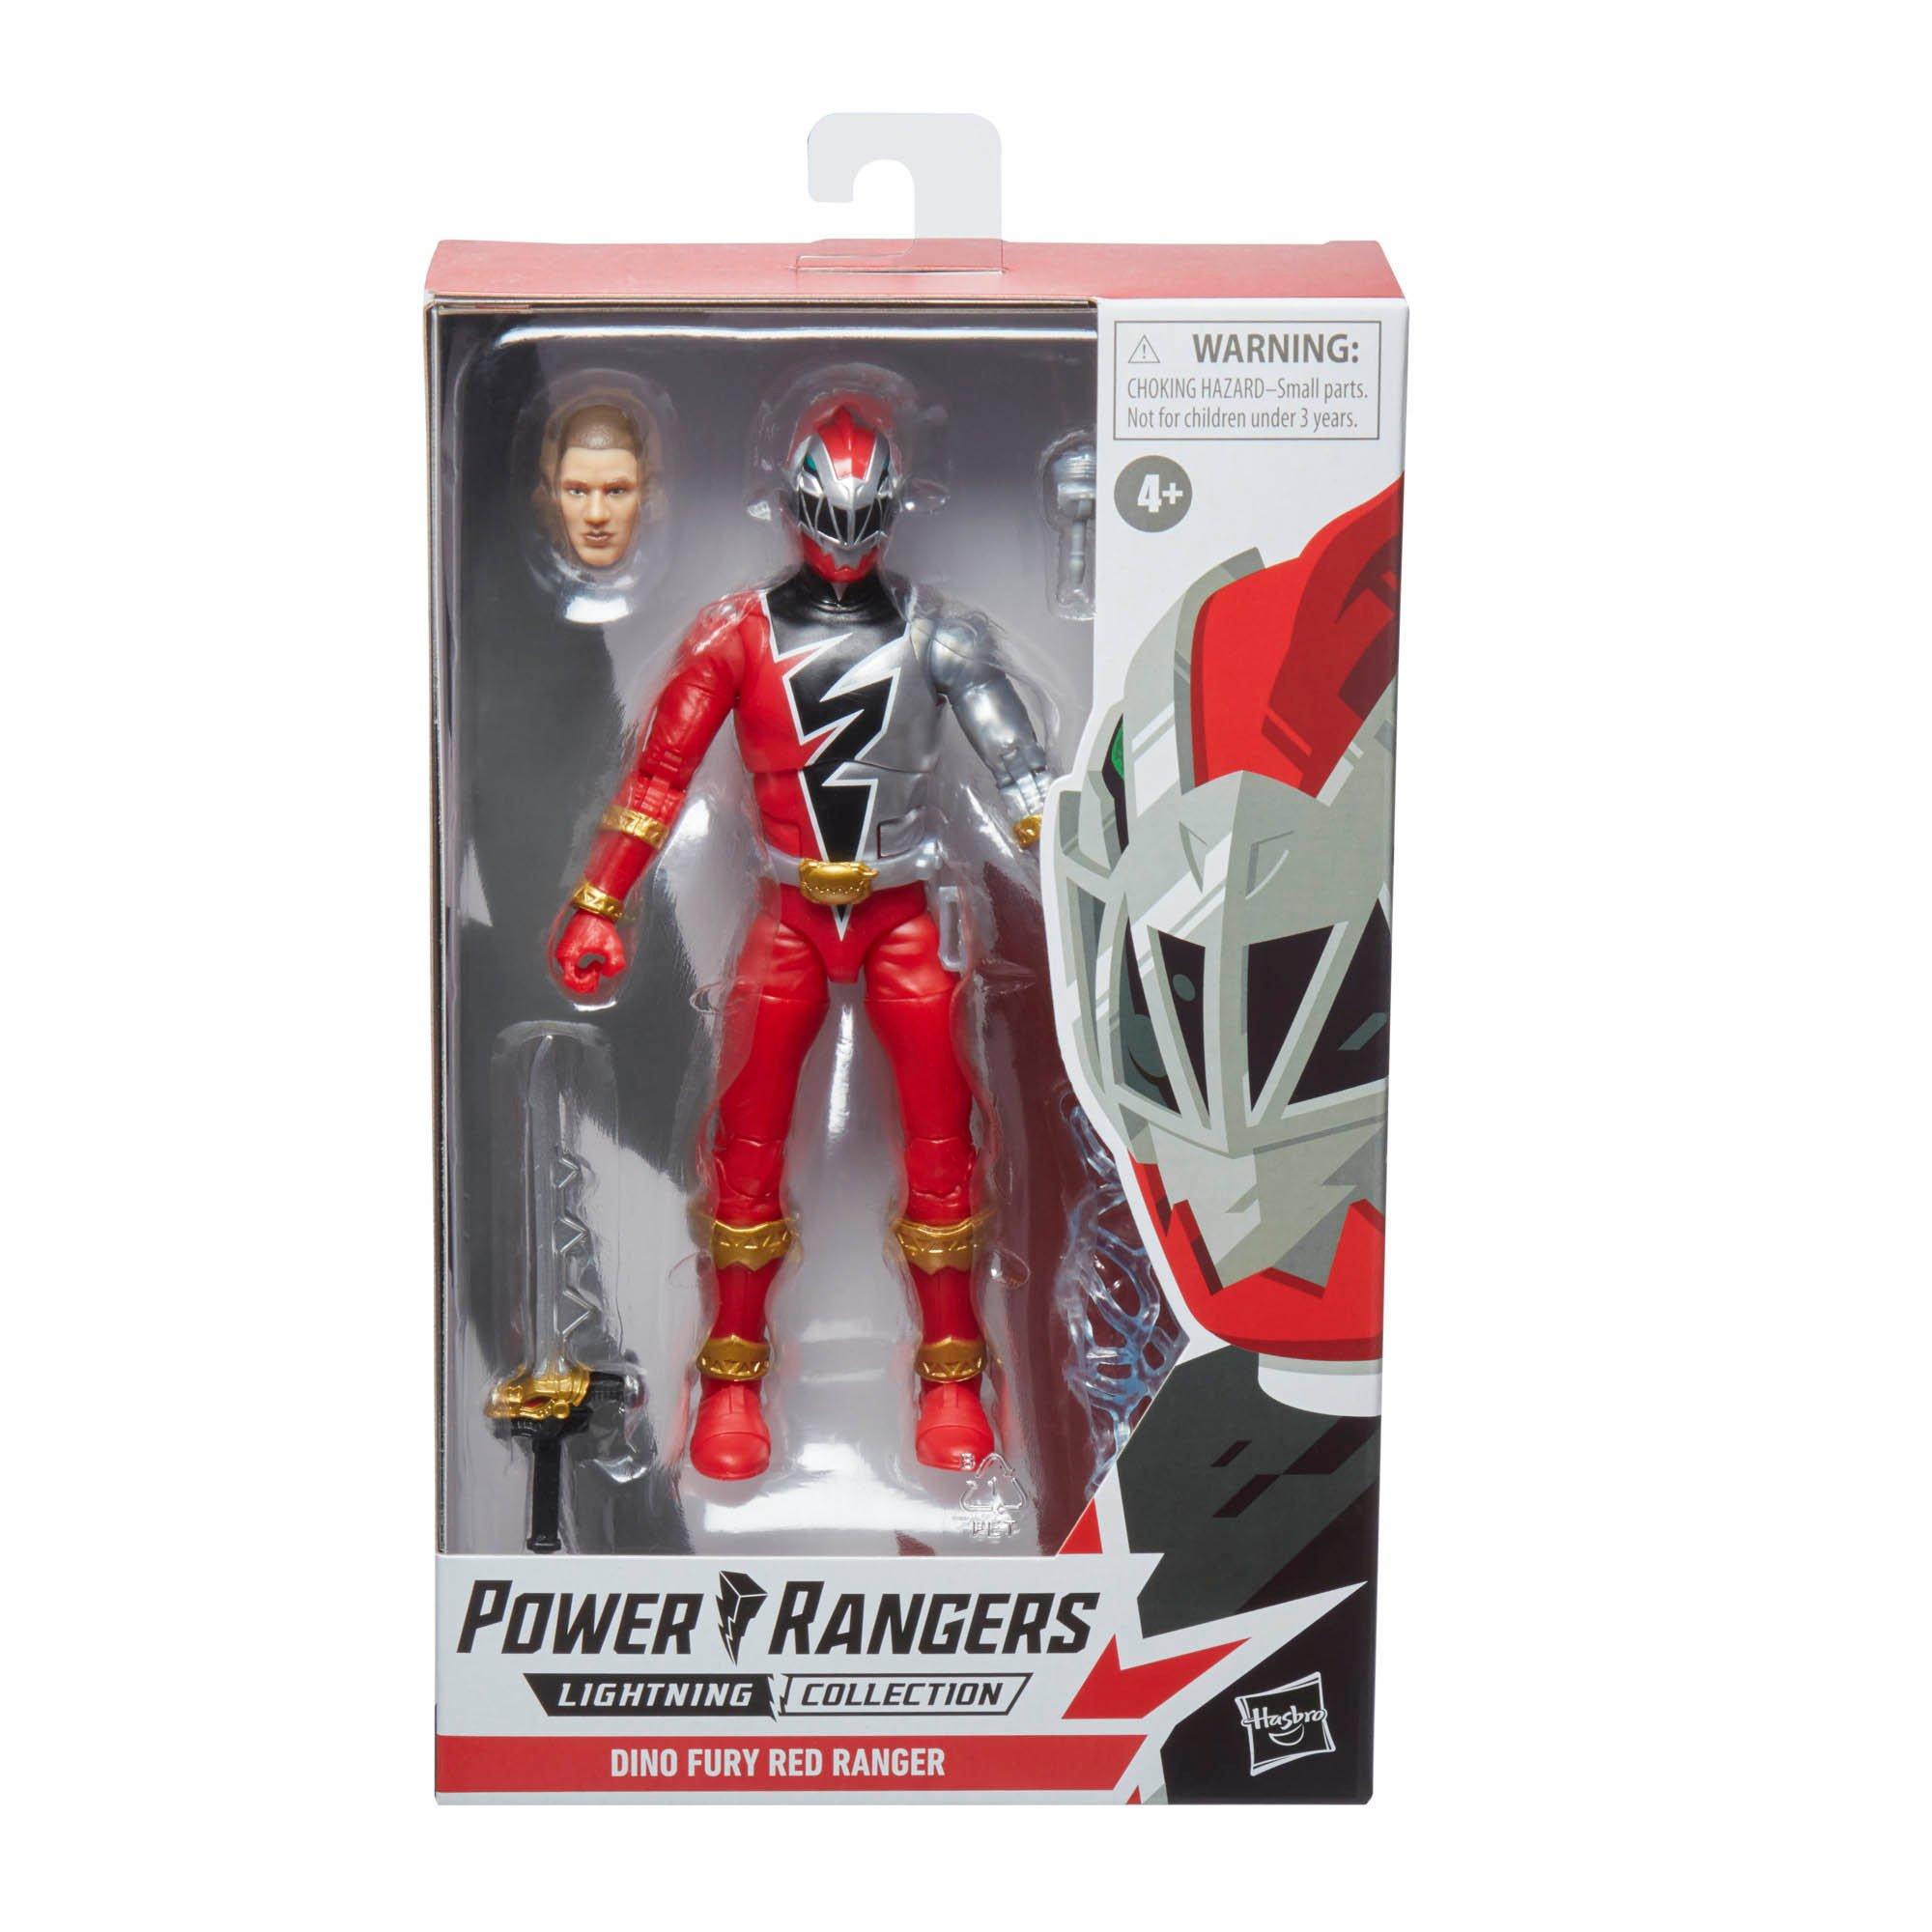 https://media.gamestop.com/i/gamestop/11160366_ALT10/Hasbro-Power-Rangers-Lightning-Collection-Dino-Fury-Red-Ranger-6-in-Action-Figure?$pdp$